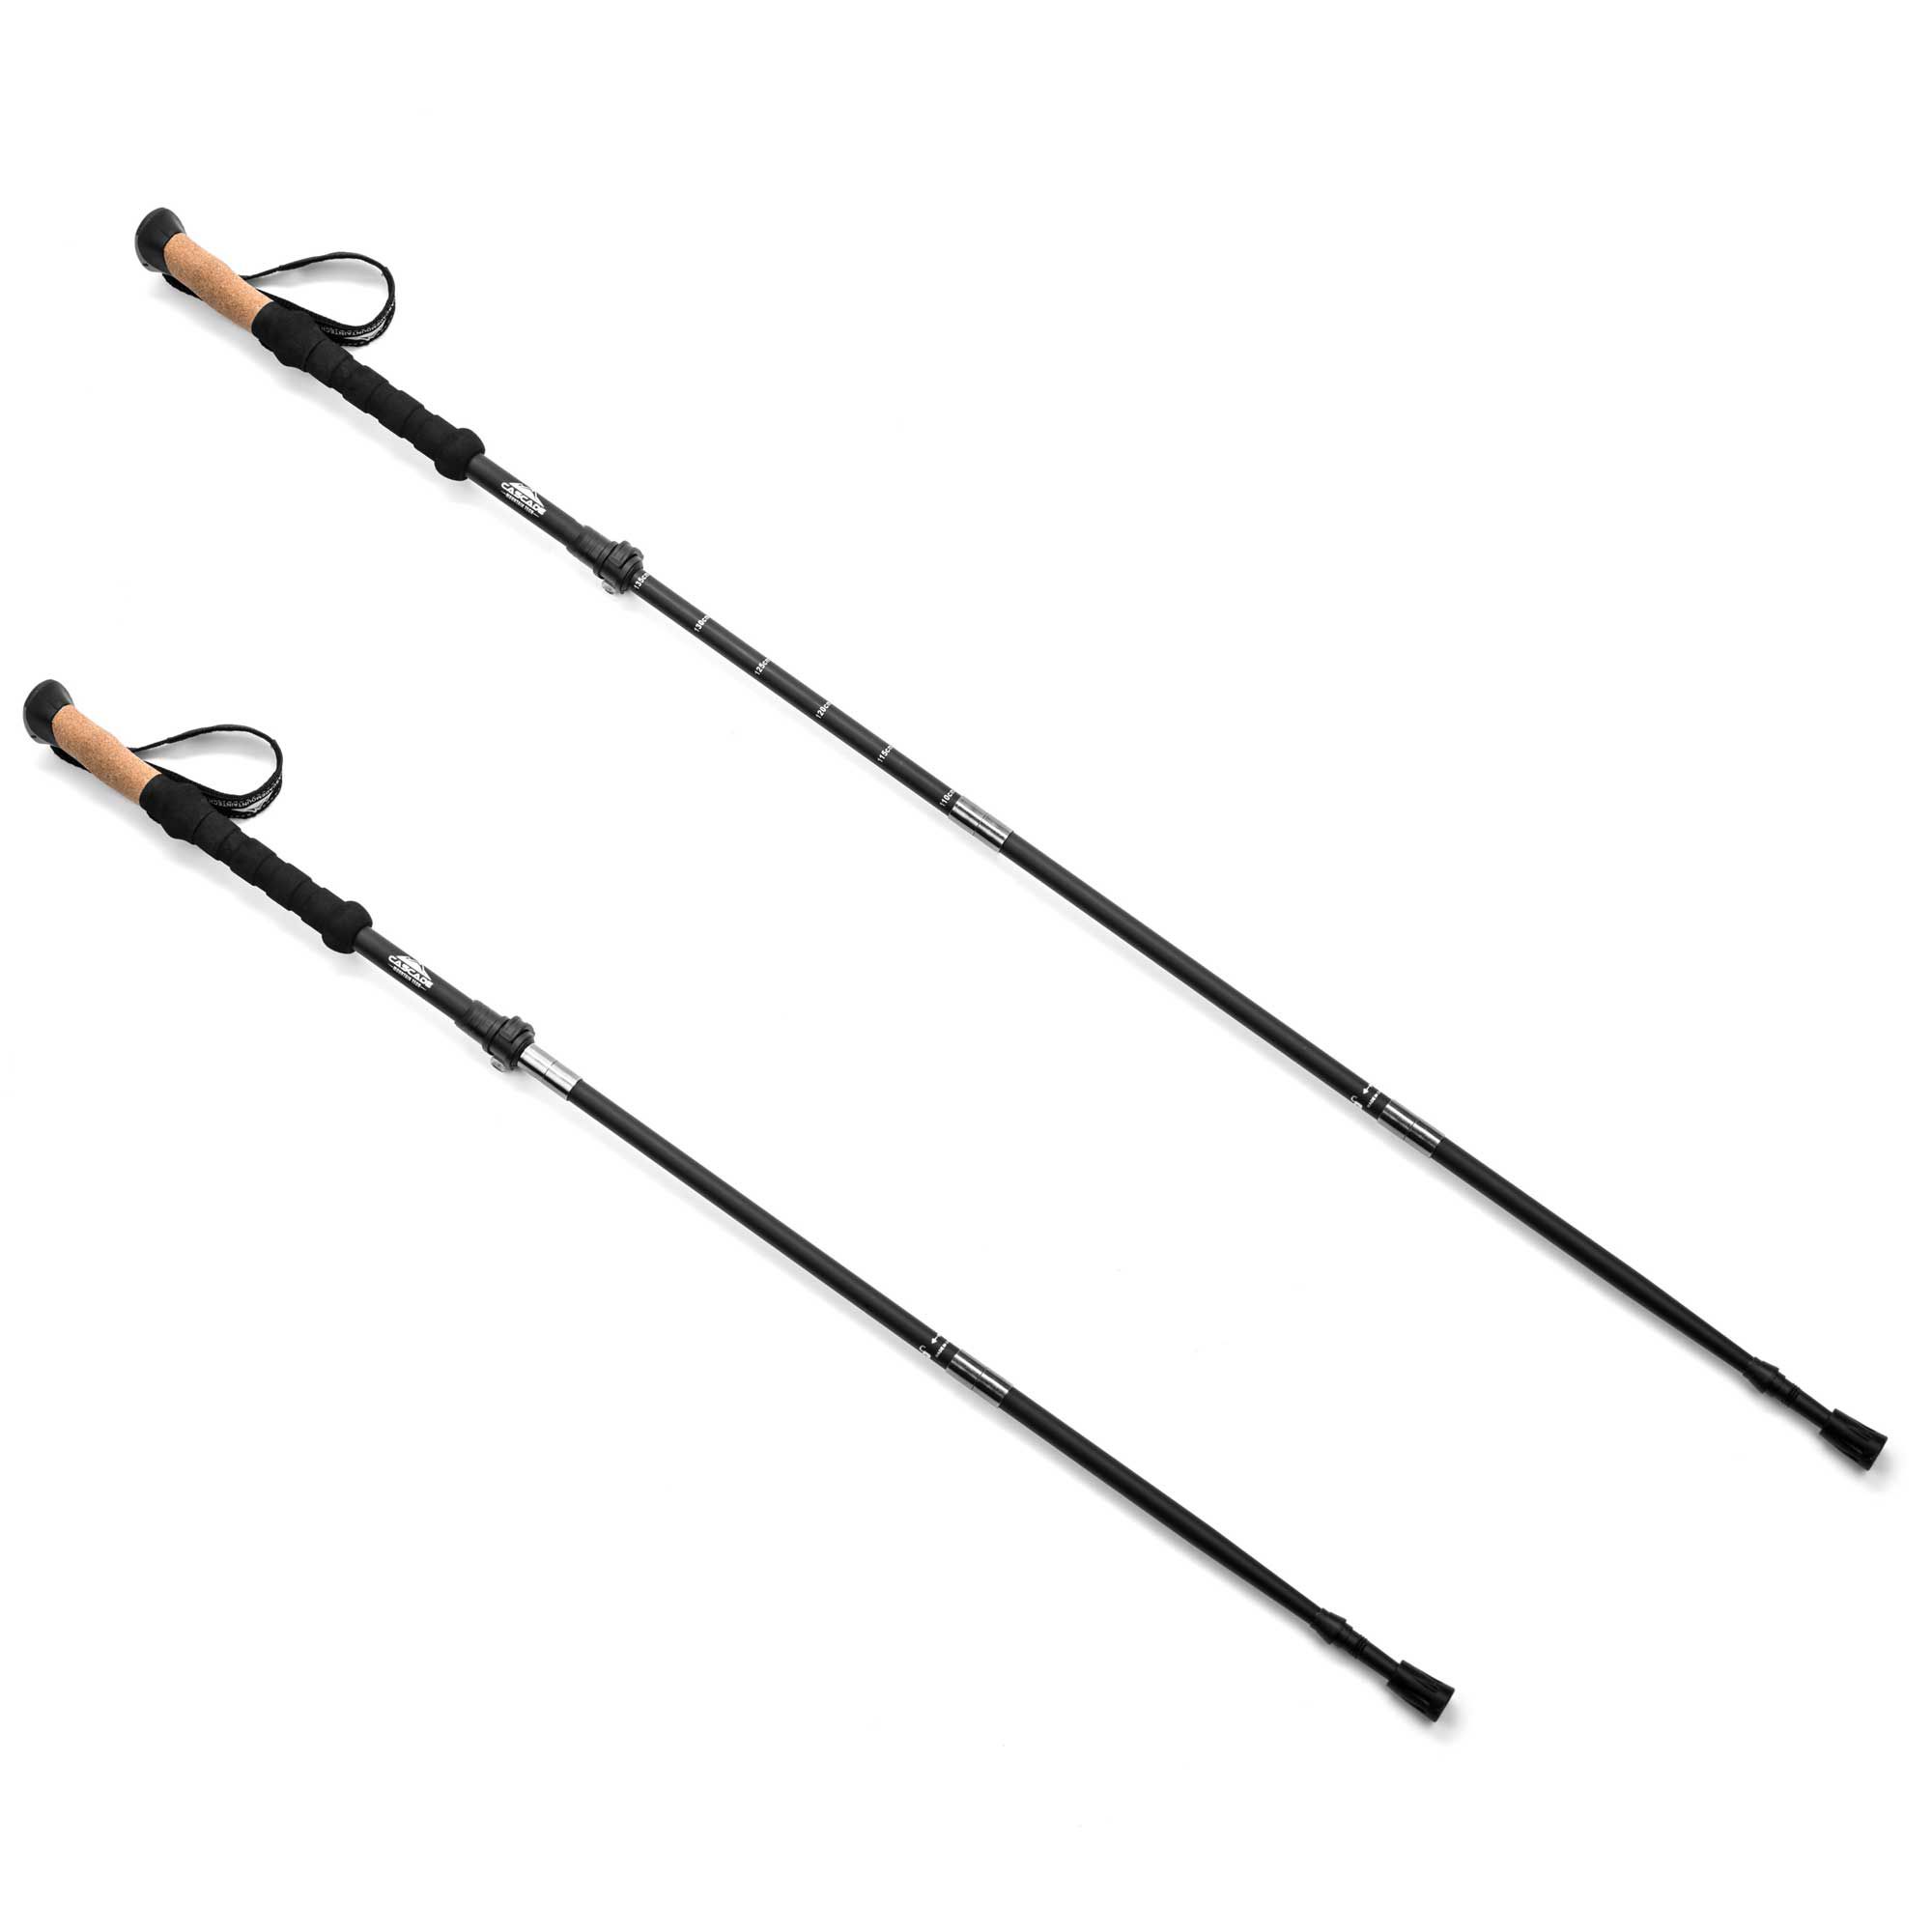 trekking pole fishing rod